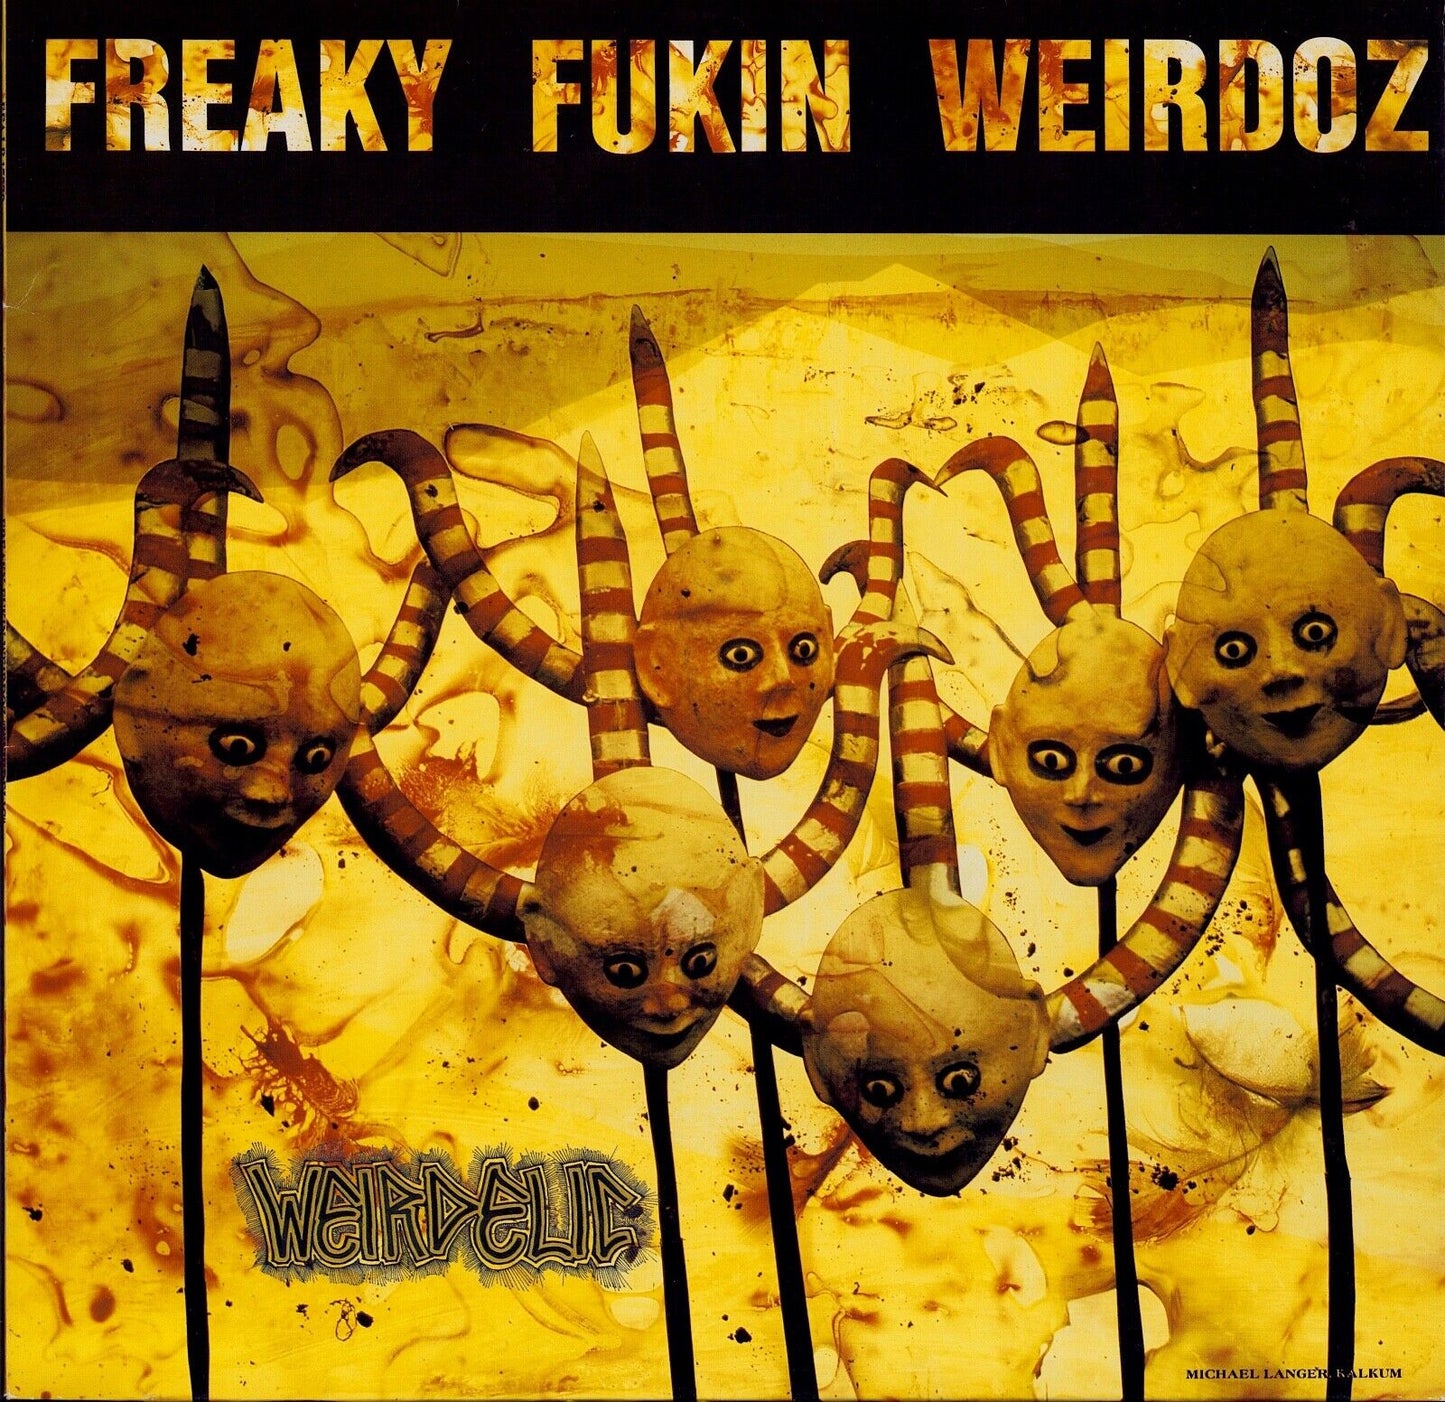 Freaky Fukin Weirdoz ‎- Weirdelic Vinyl LP